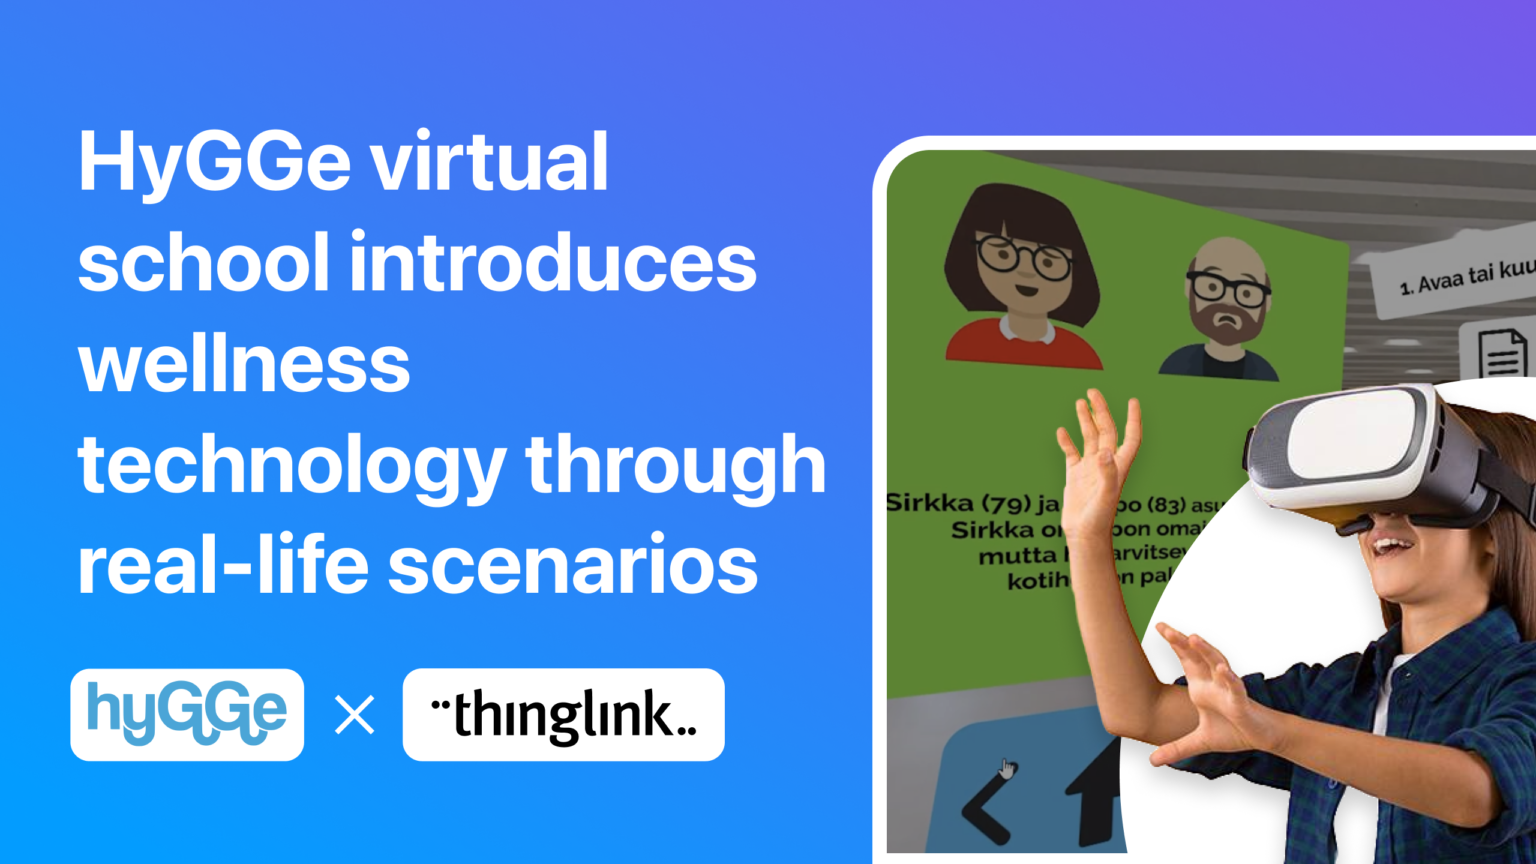 HyGGe virtual school introduces wellness technology through real-life scenarios.